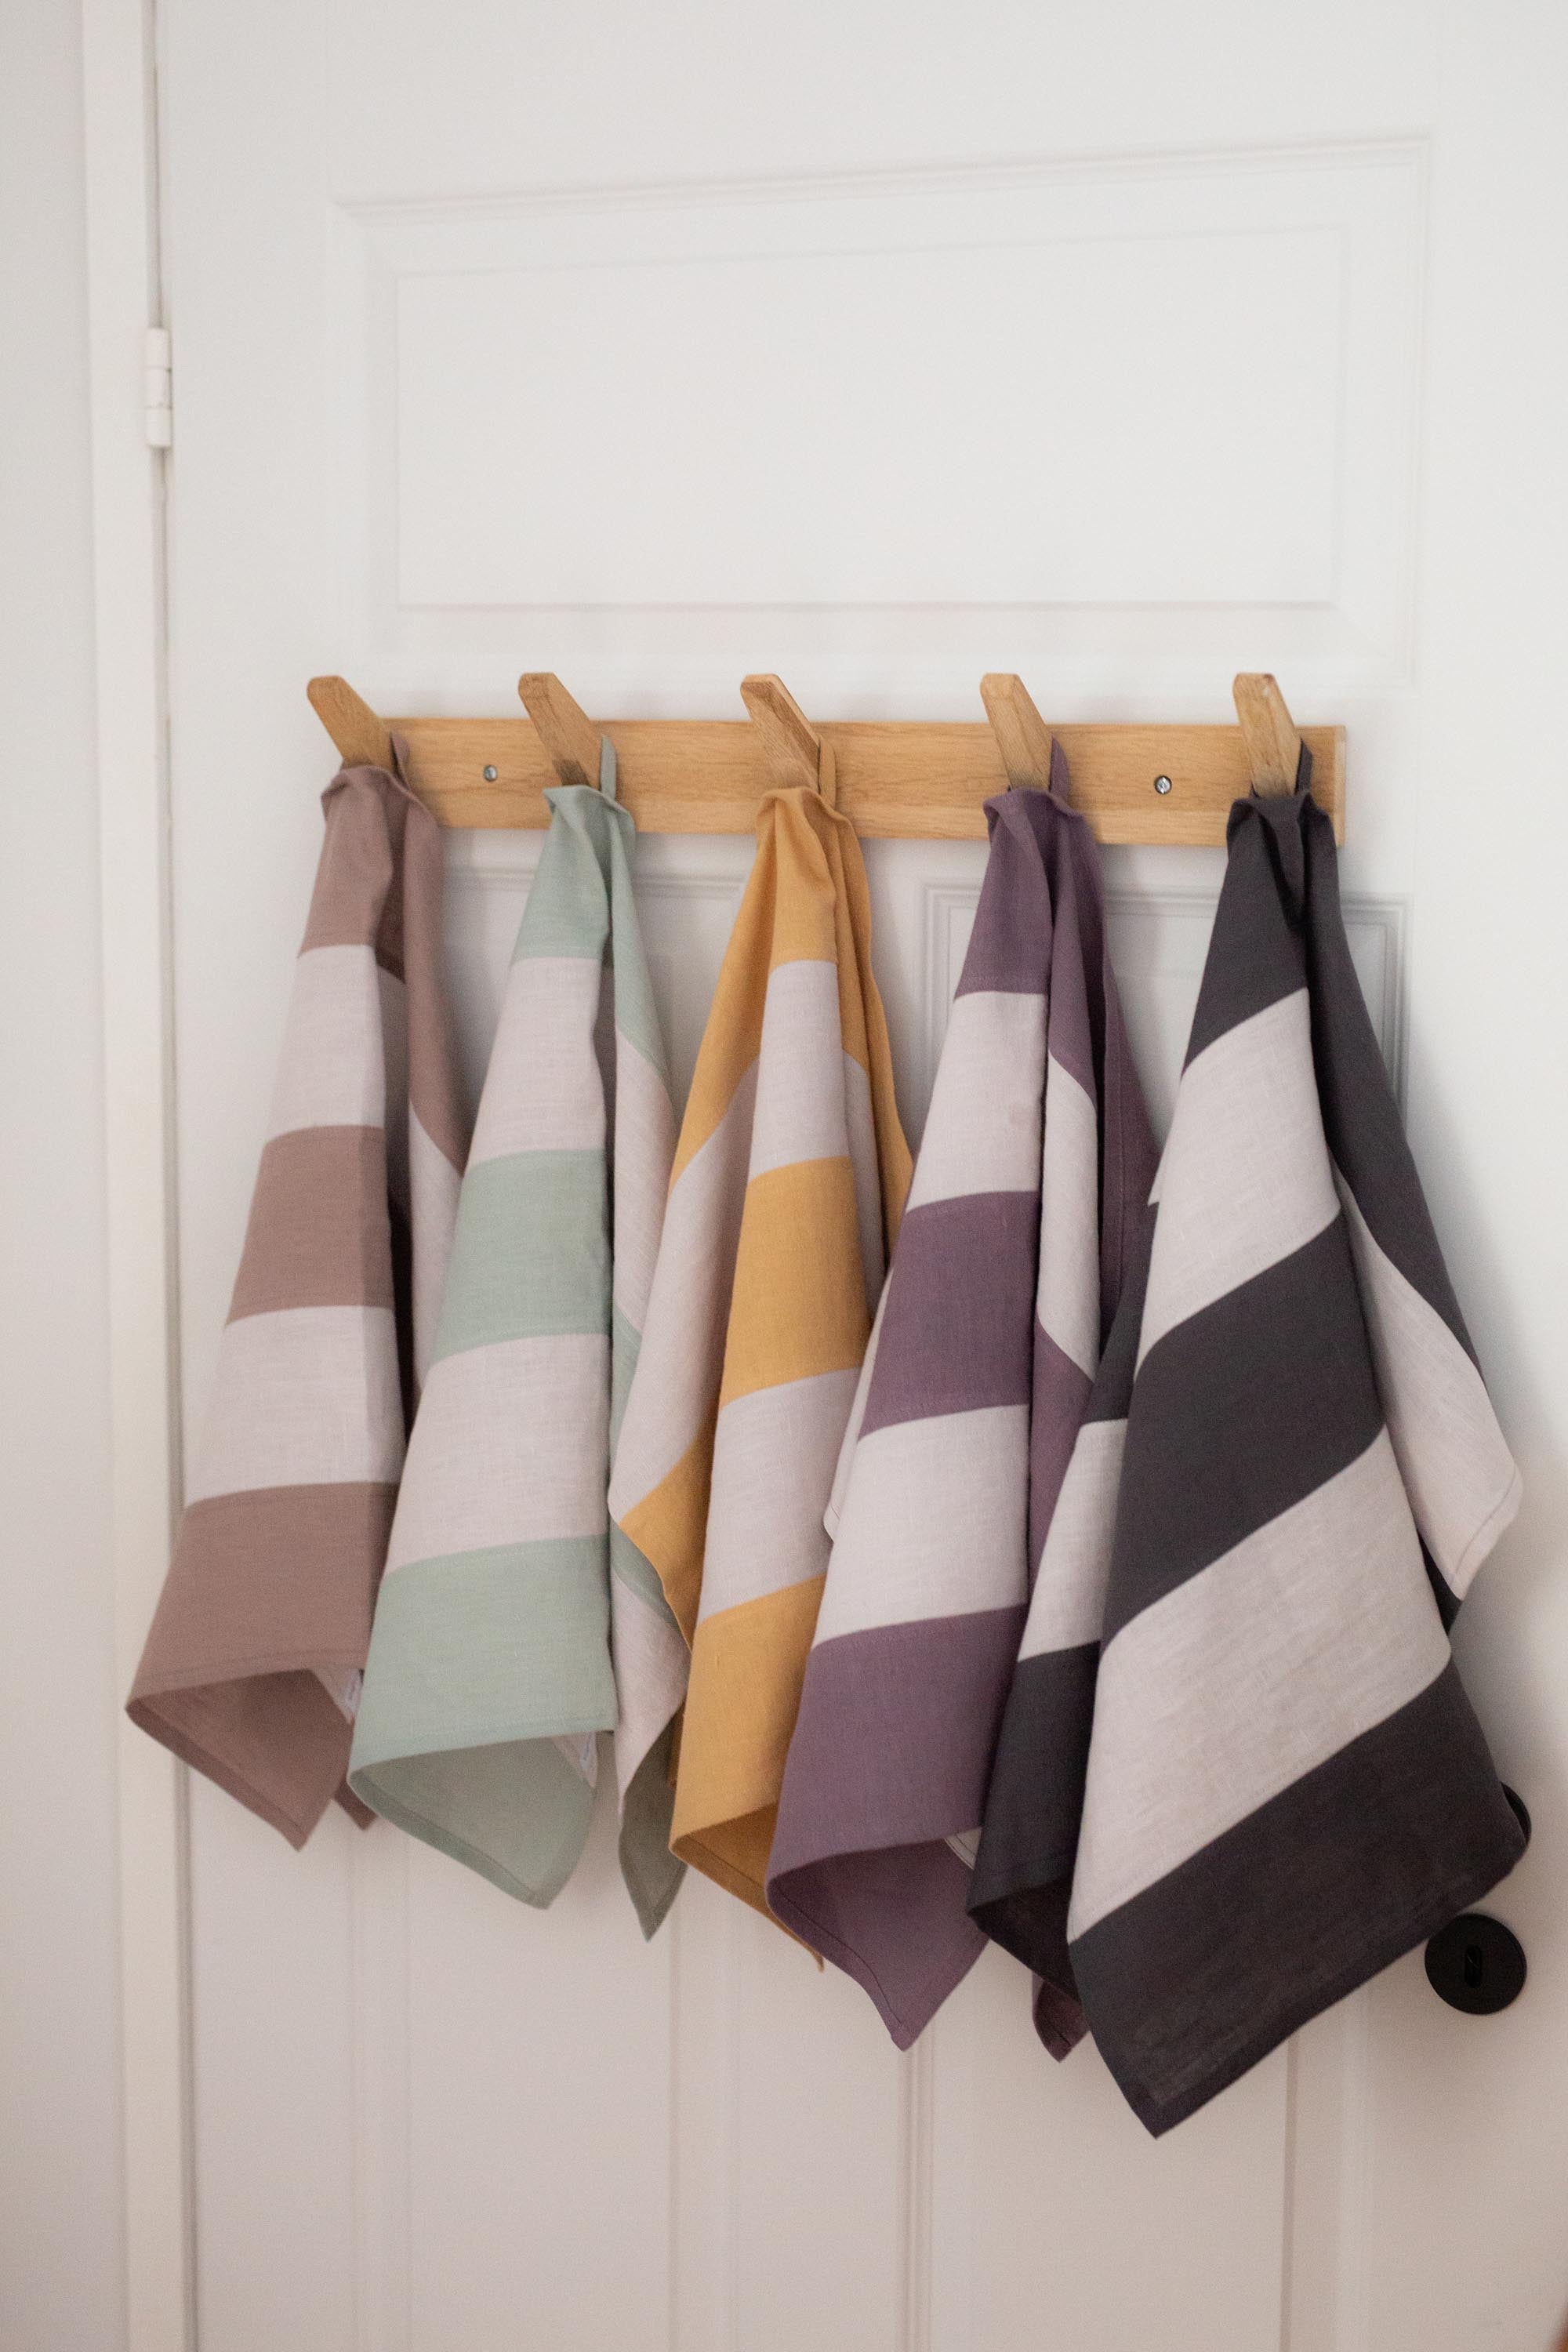 Striped Kitchen Towels, Tea Towels, Colorful Kitchen Towels